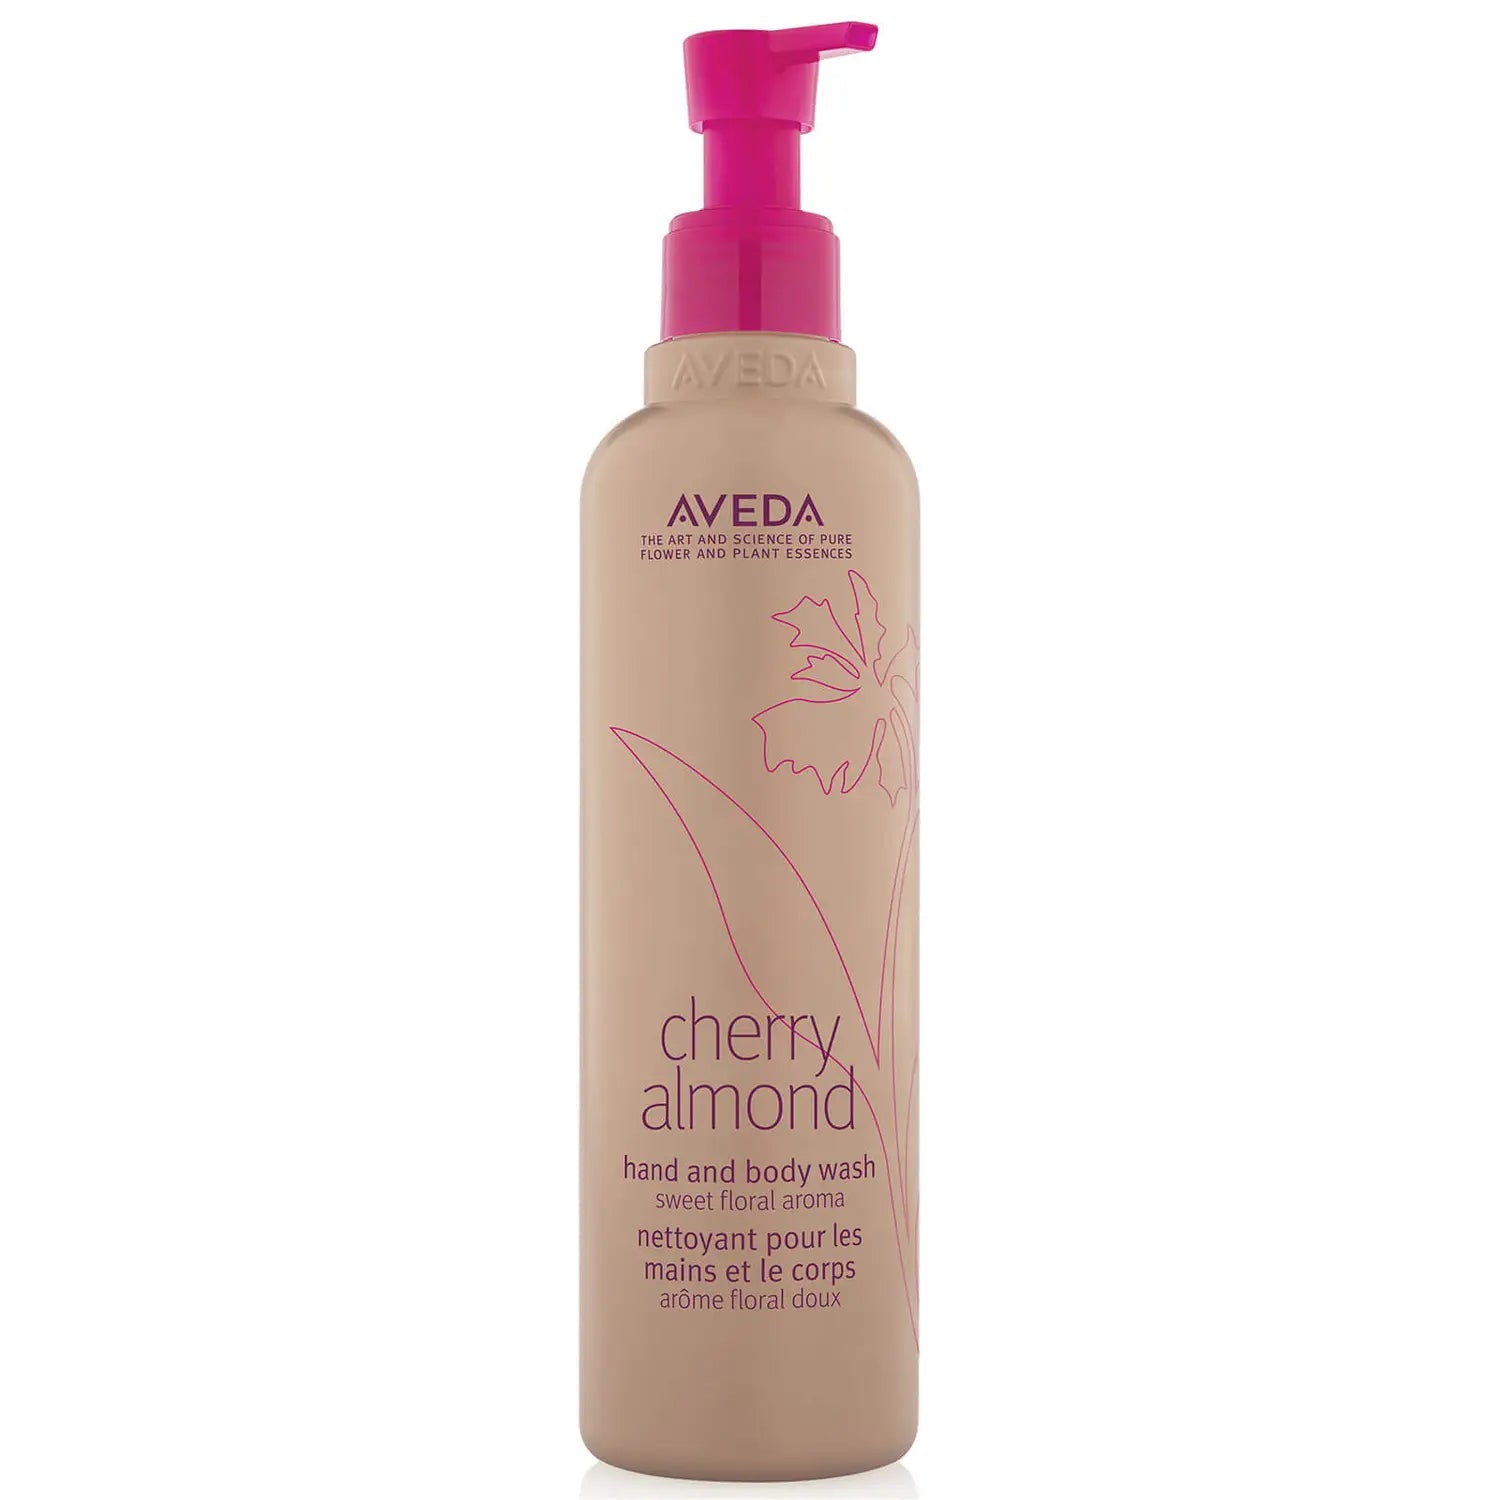 Aveda Cherry Almond Hand & Body Wash - 250ml - Glow Addict Luxe